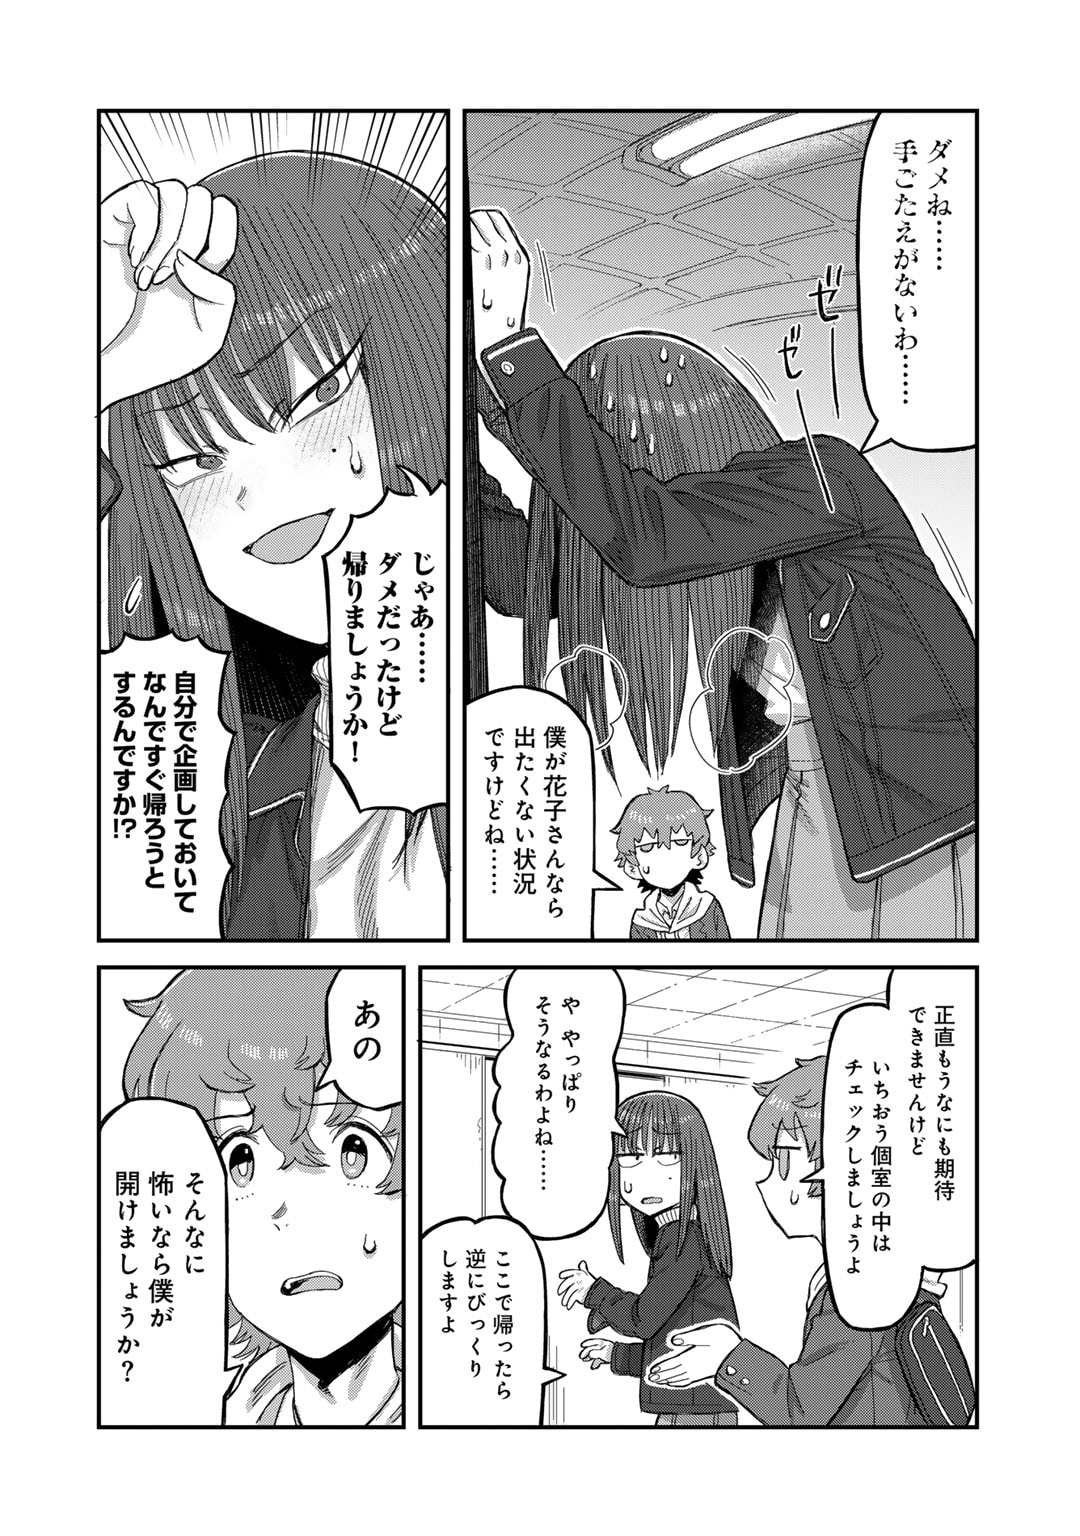 Kurono-san wa Occult ga Suki! - Chapter 1 - Page 12